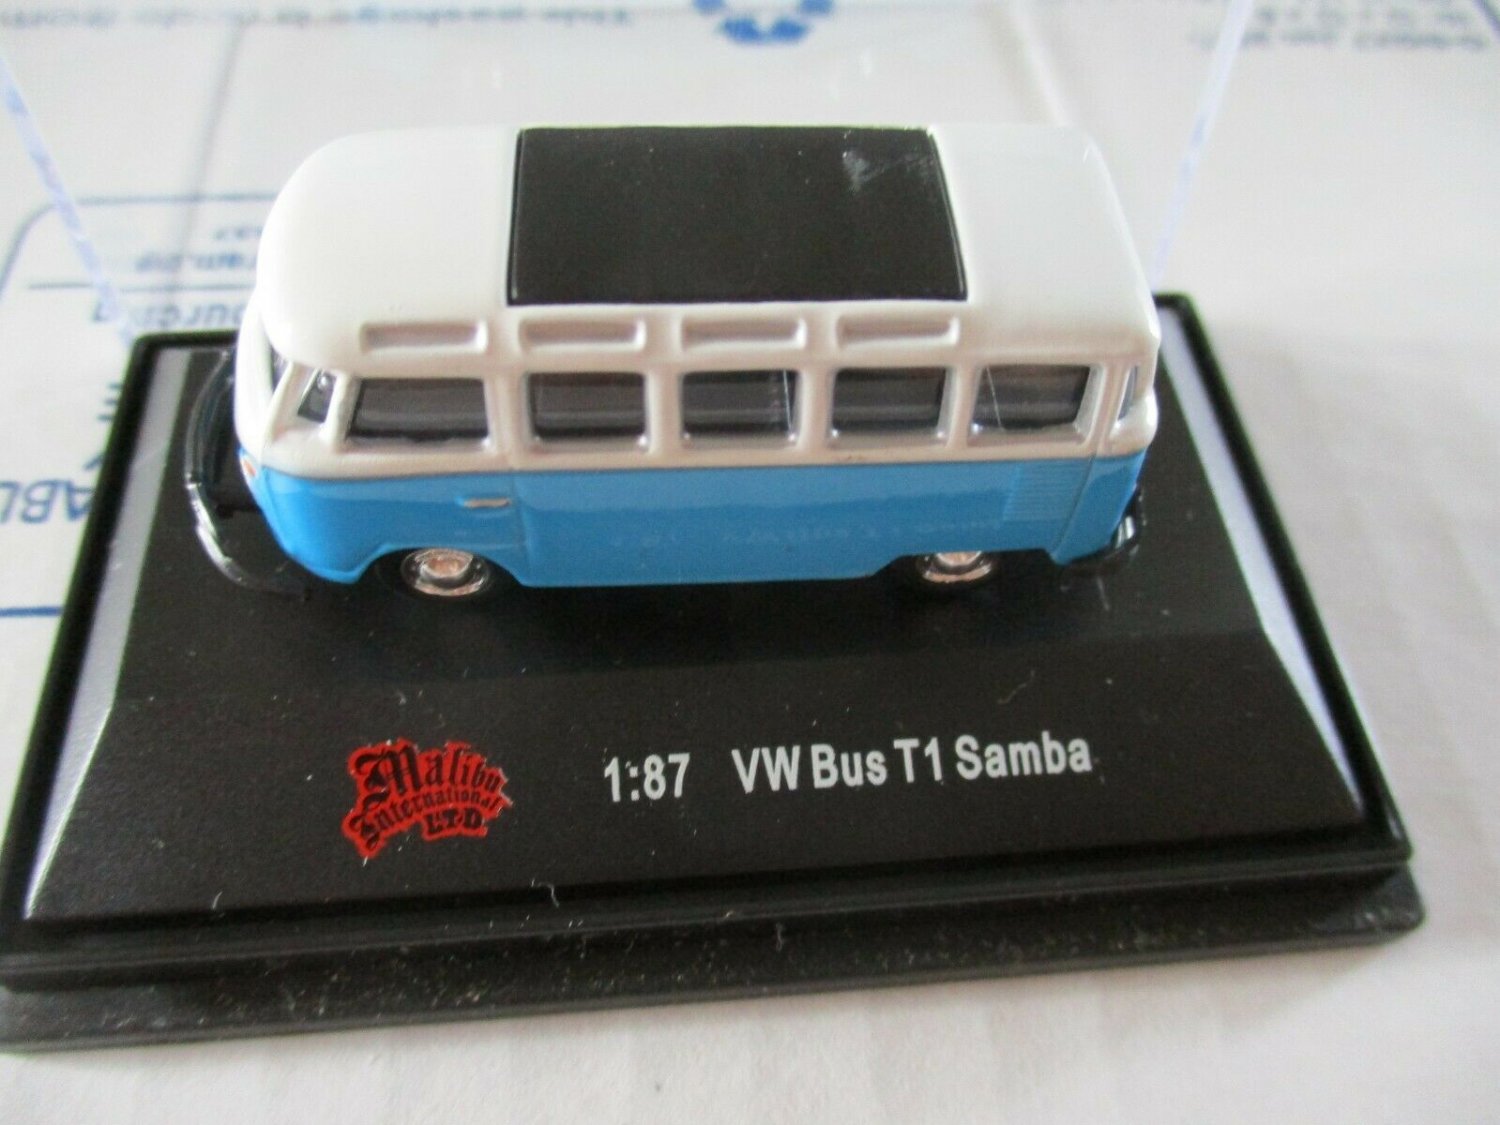 VW Bus T1 Samba 1/87 scale